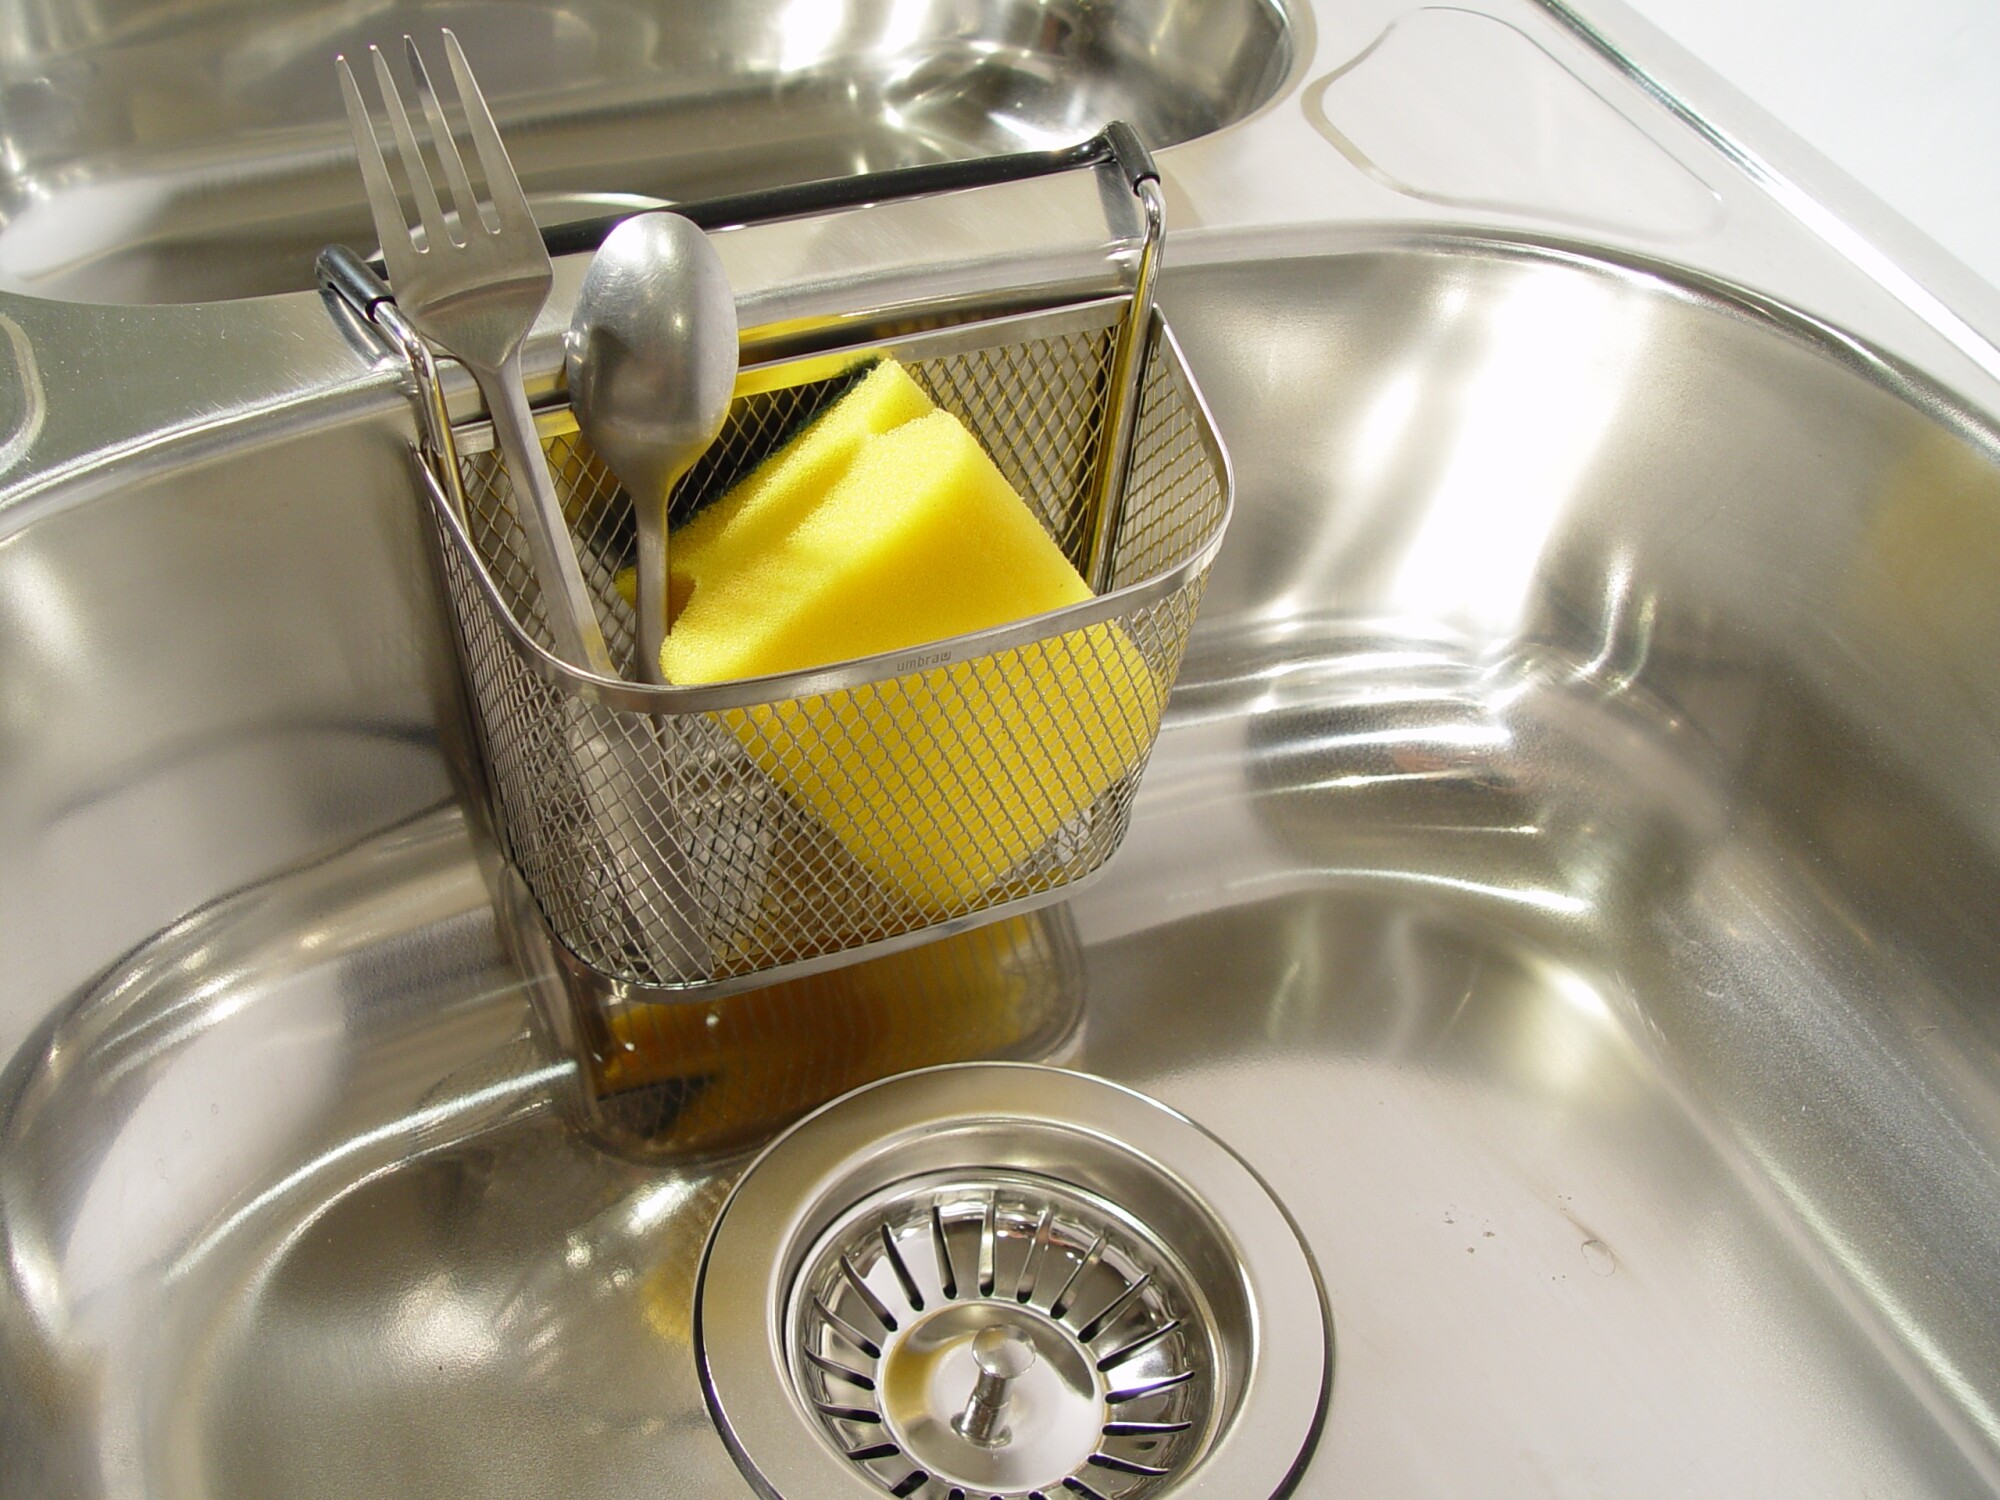 How To Clean Kitchen Sink